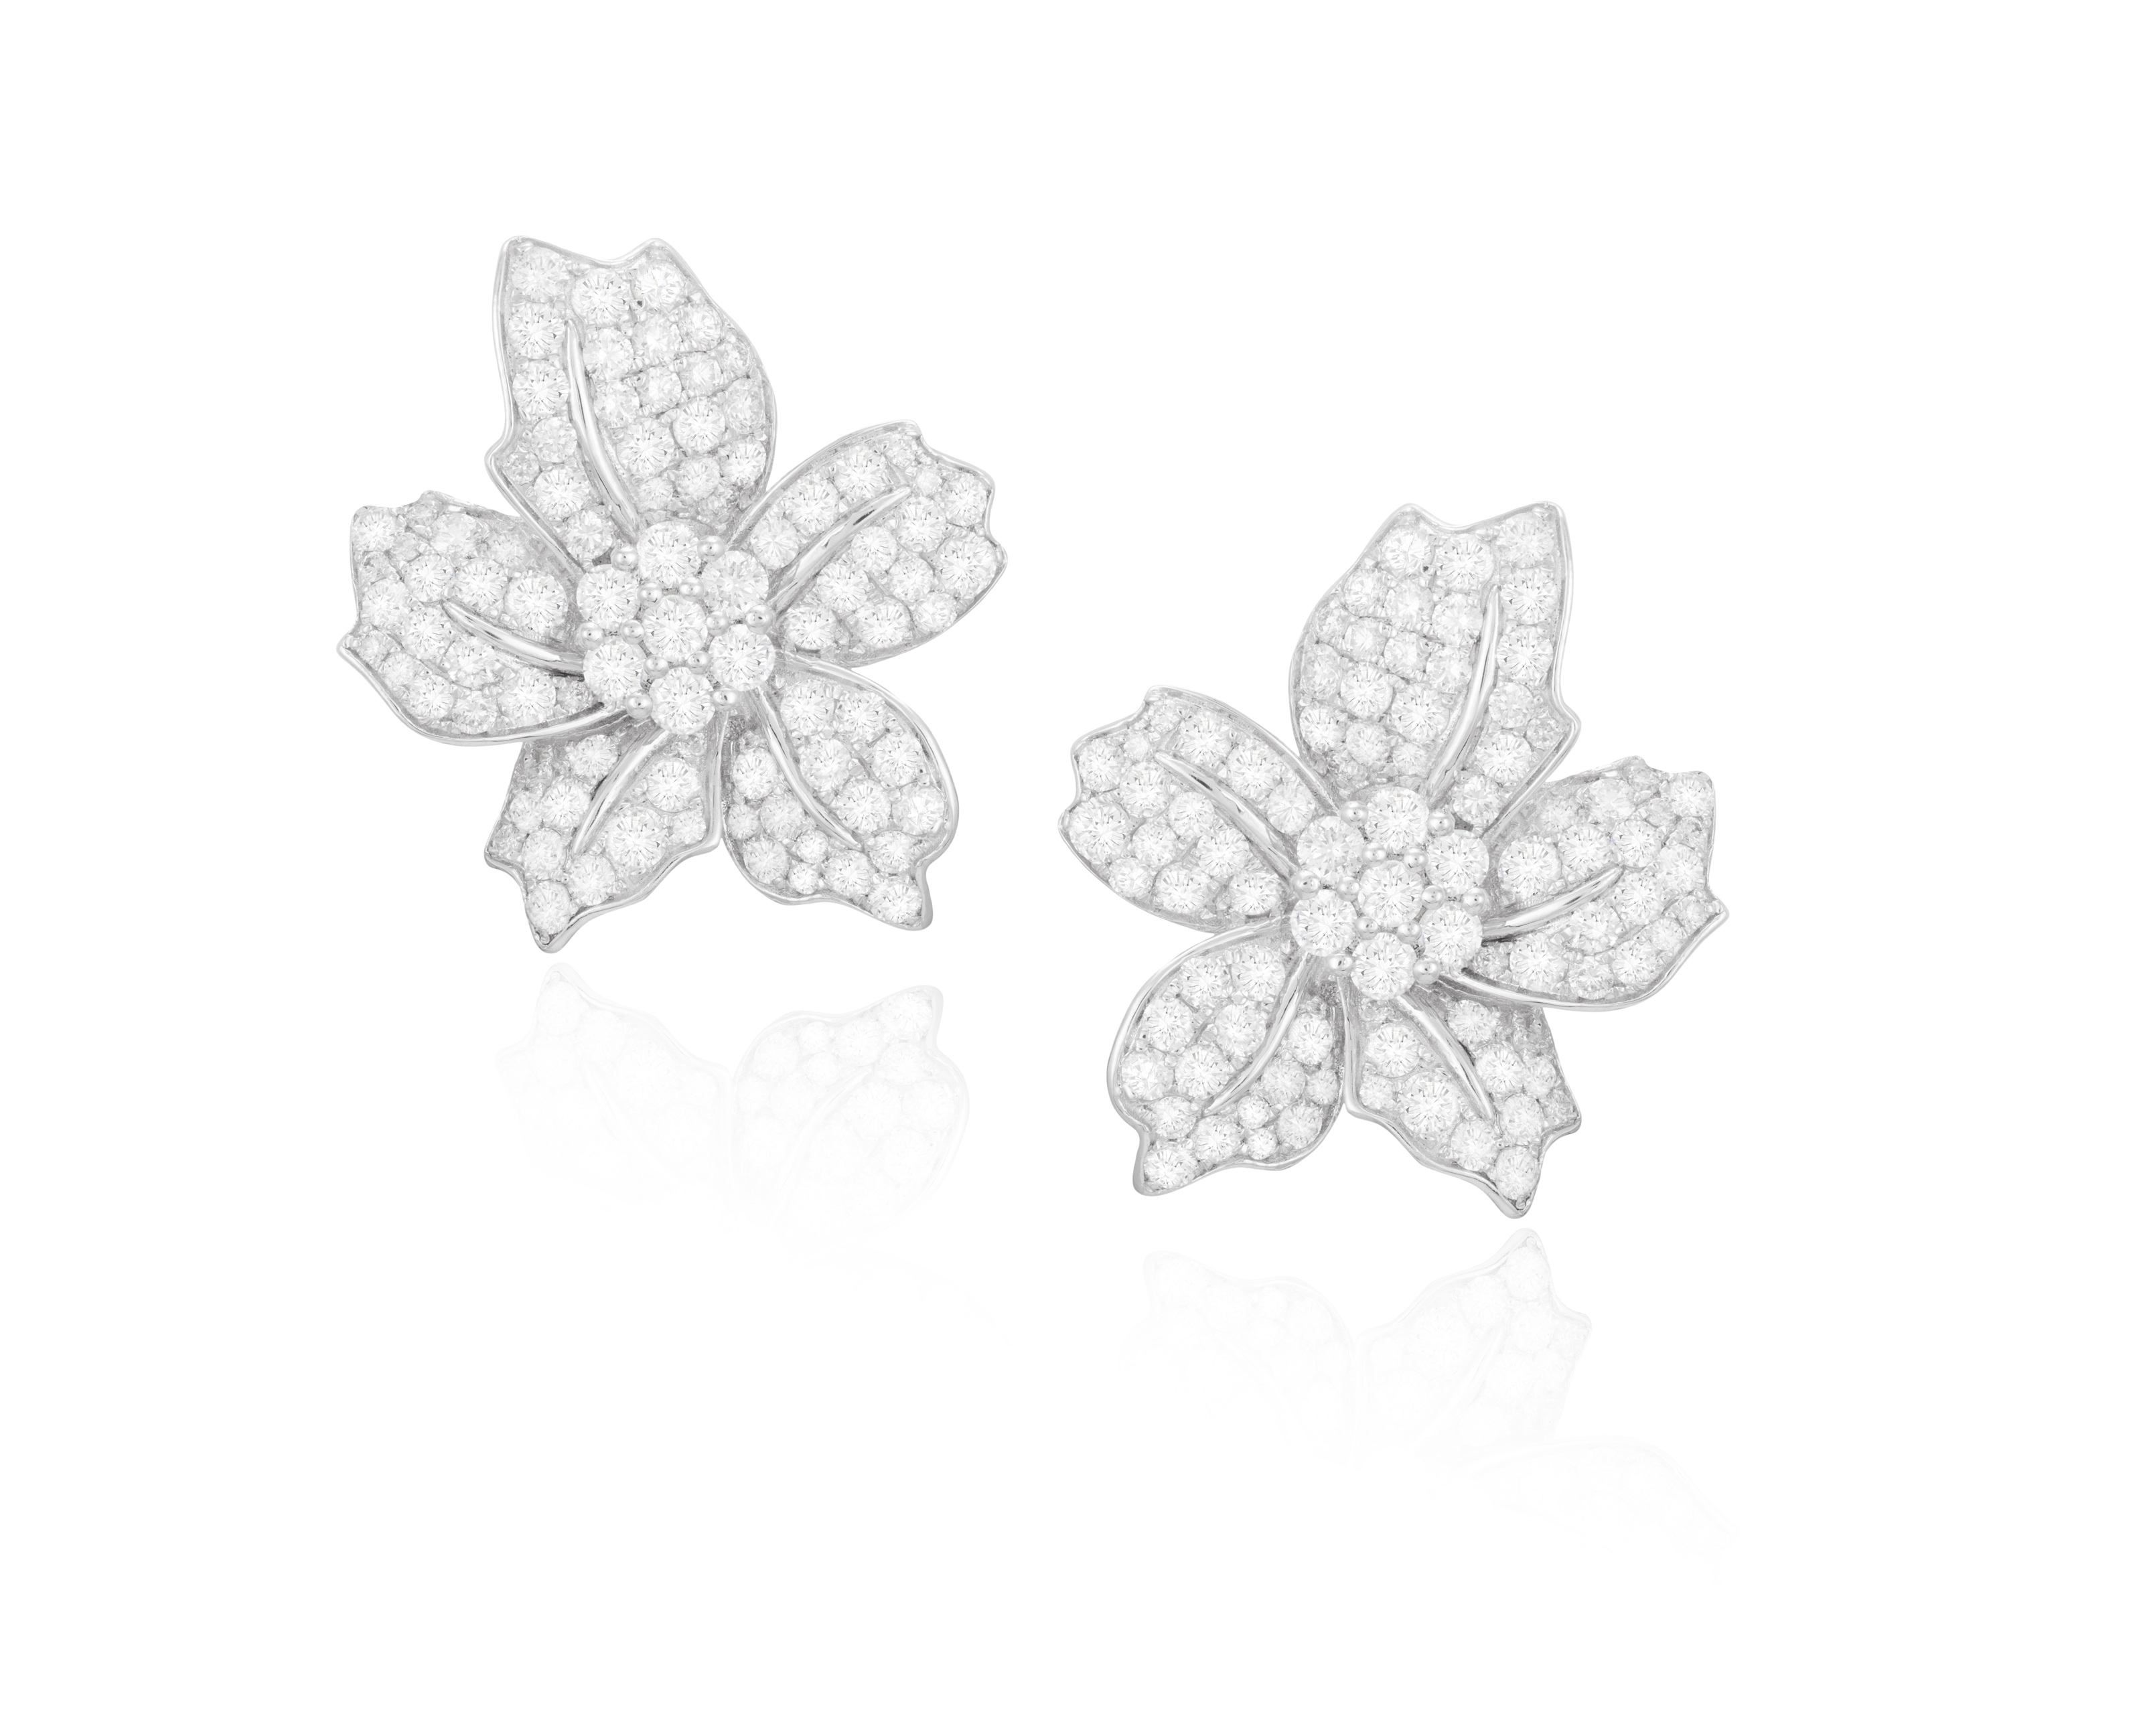 A PAIR OF DIAMOND EARRINGS Each flowerhead pavé-set with brilliant-cut diamonds, mounted in 18K